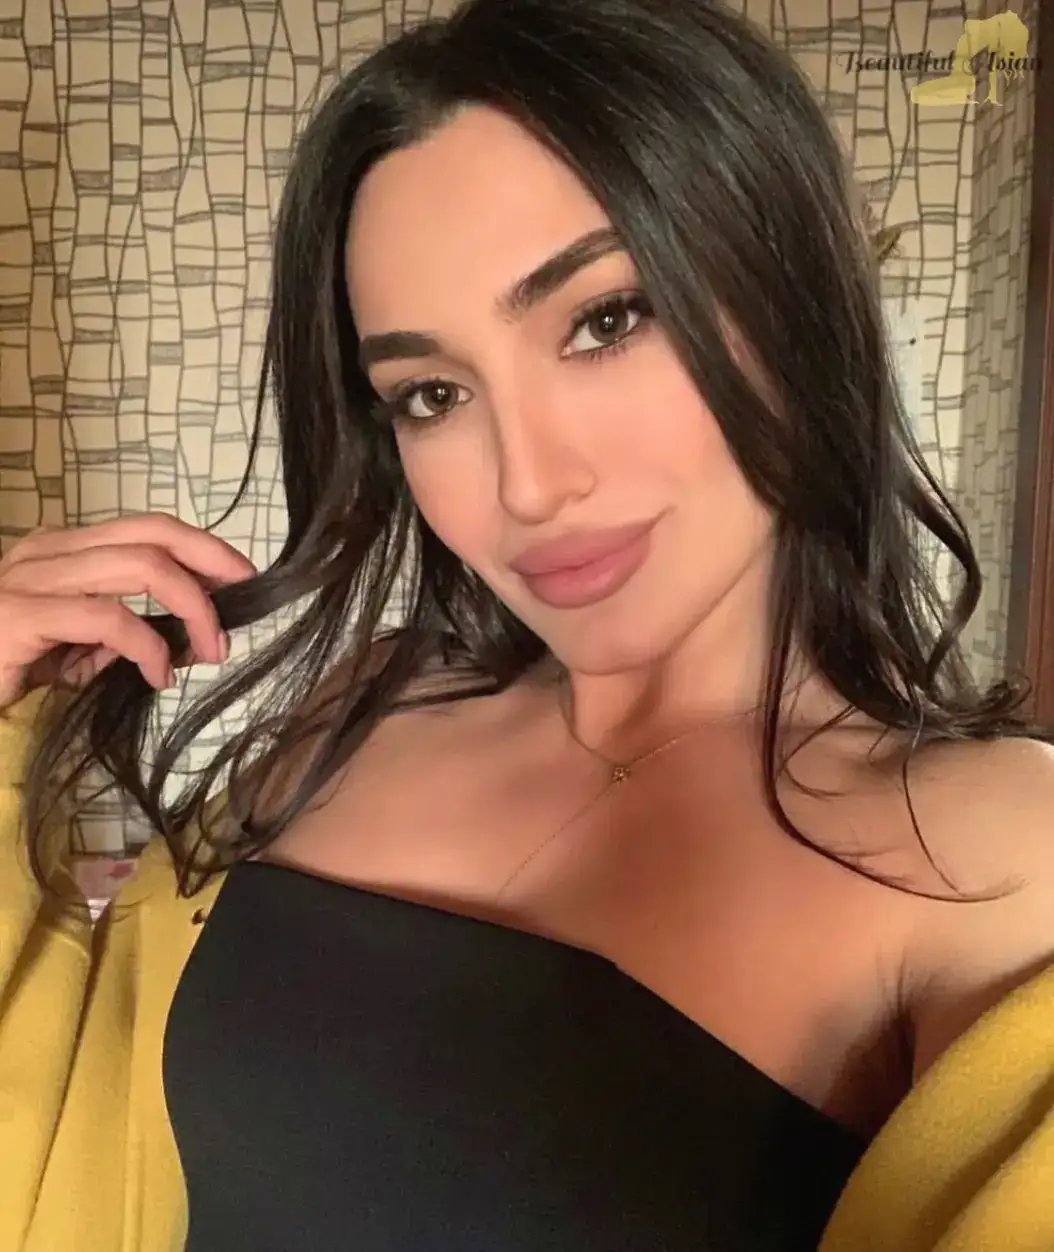 pretty Armenian girl pic